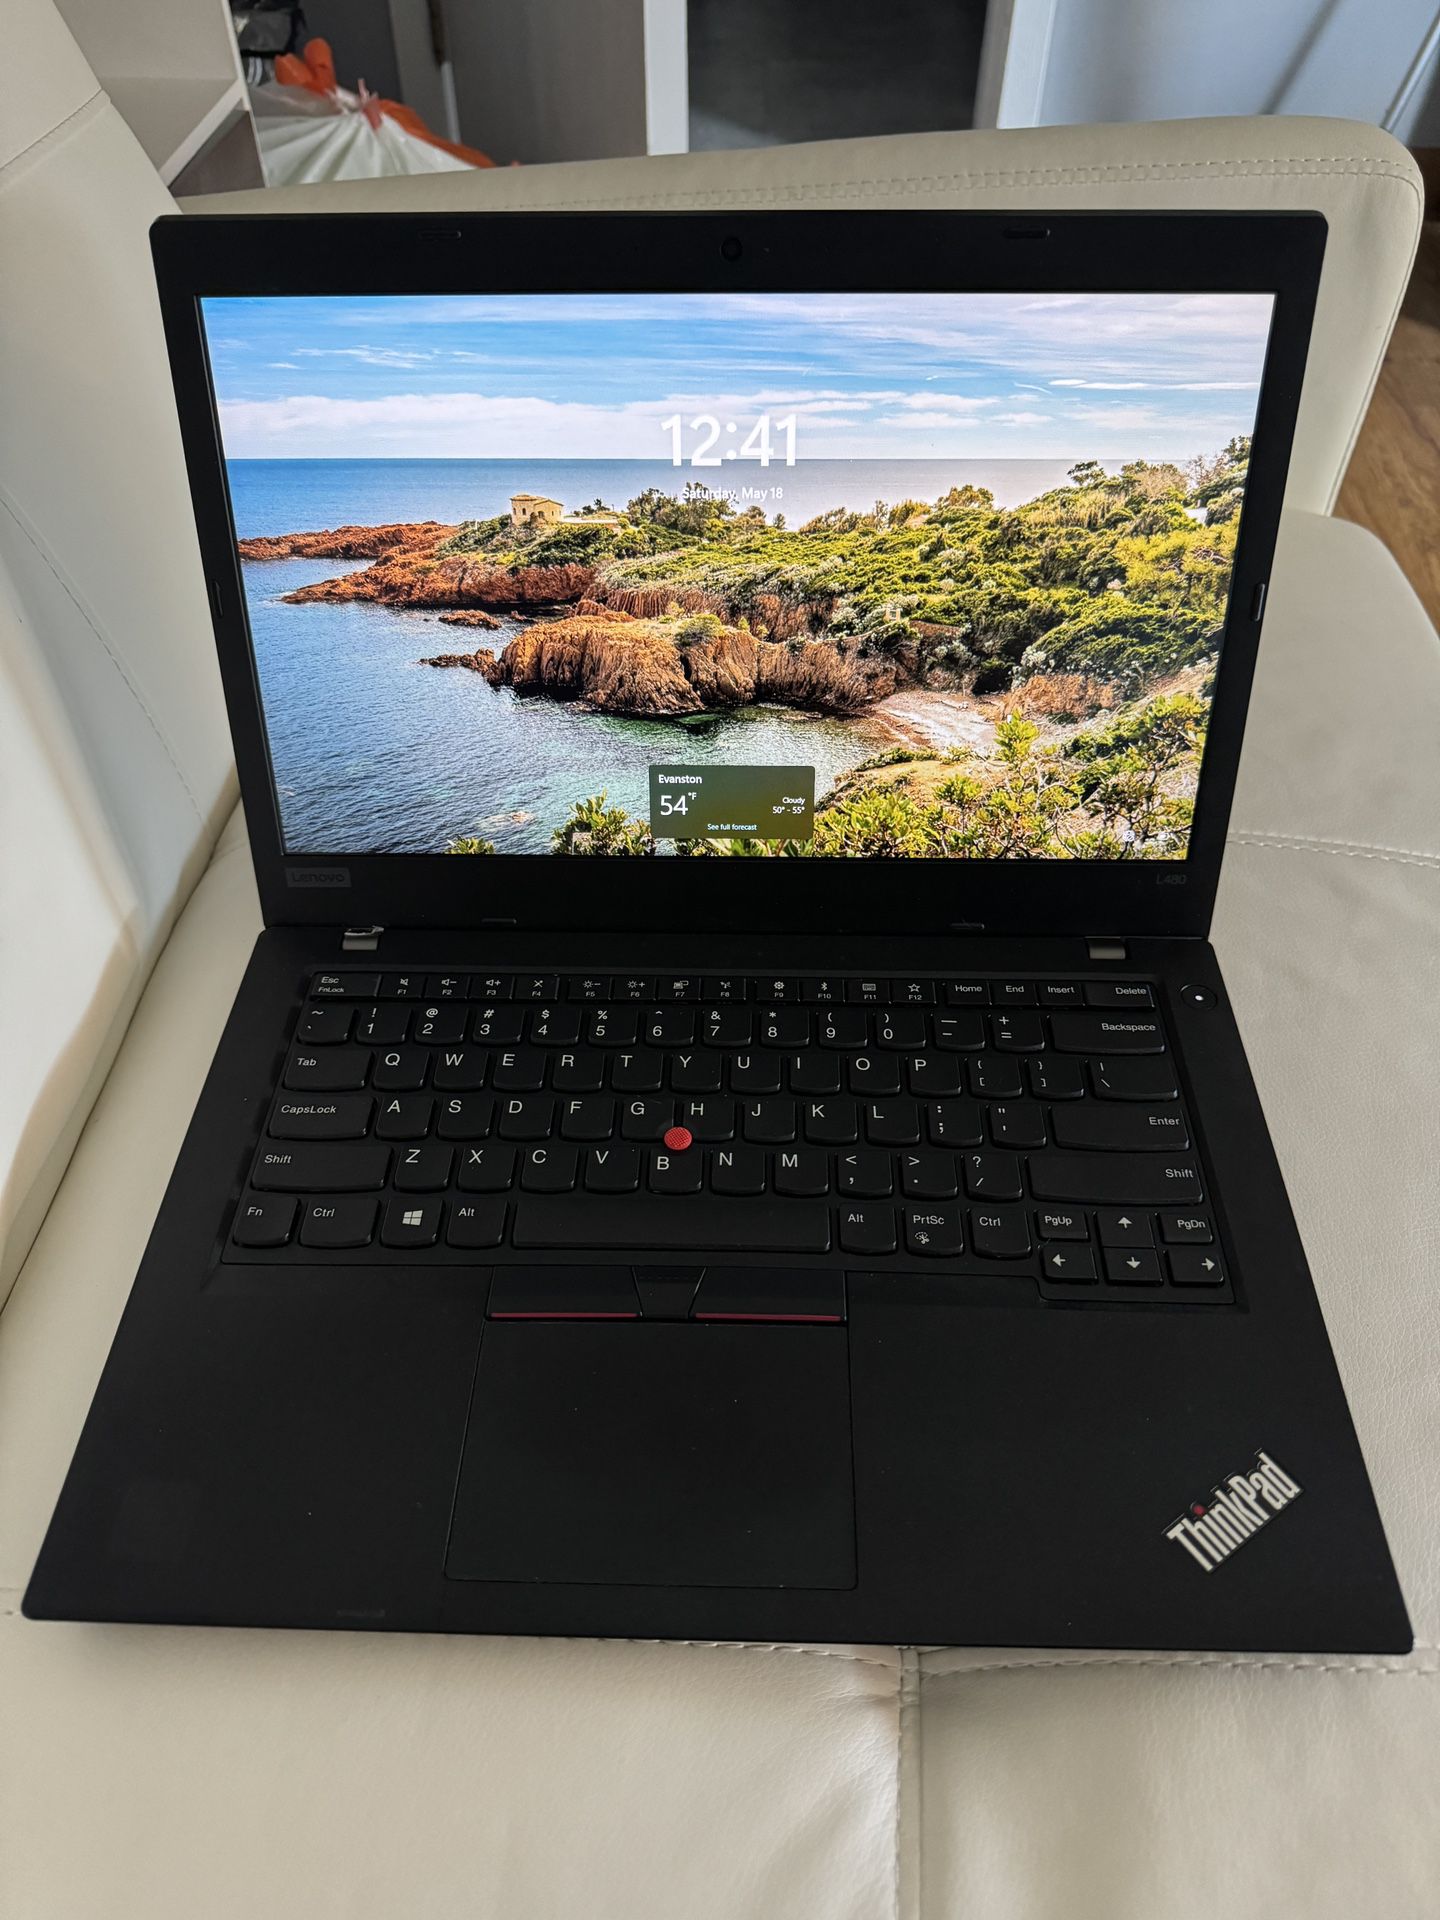 Lenovo Thinkpad L480 Laptop - 14-inch i5-8250 256GB SSD 8GB Ram W11 Pro - MS Office